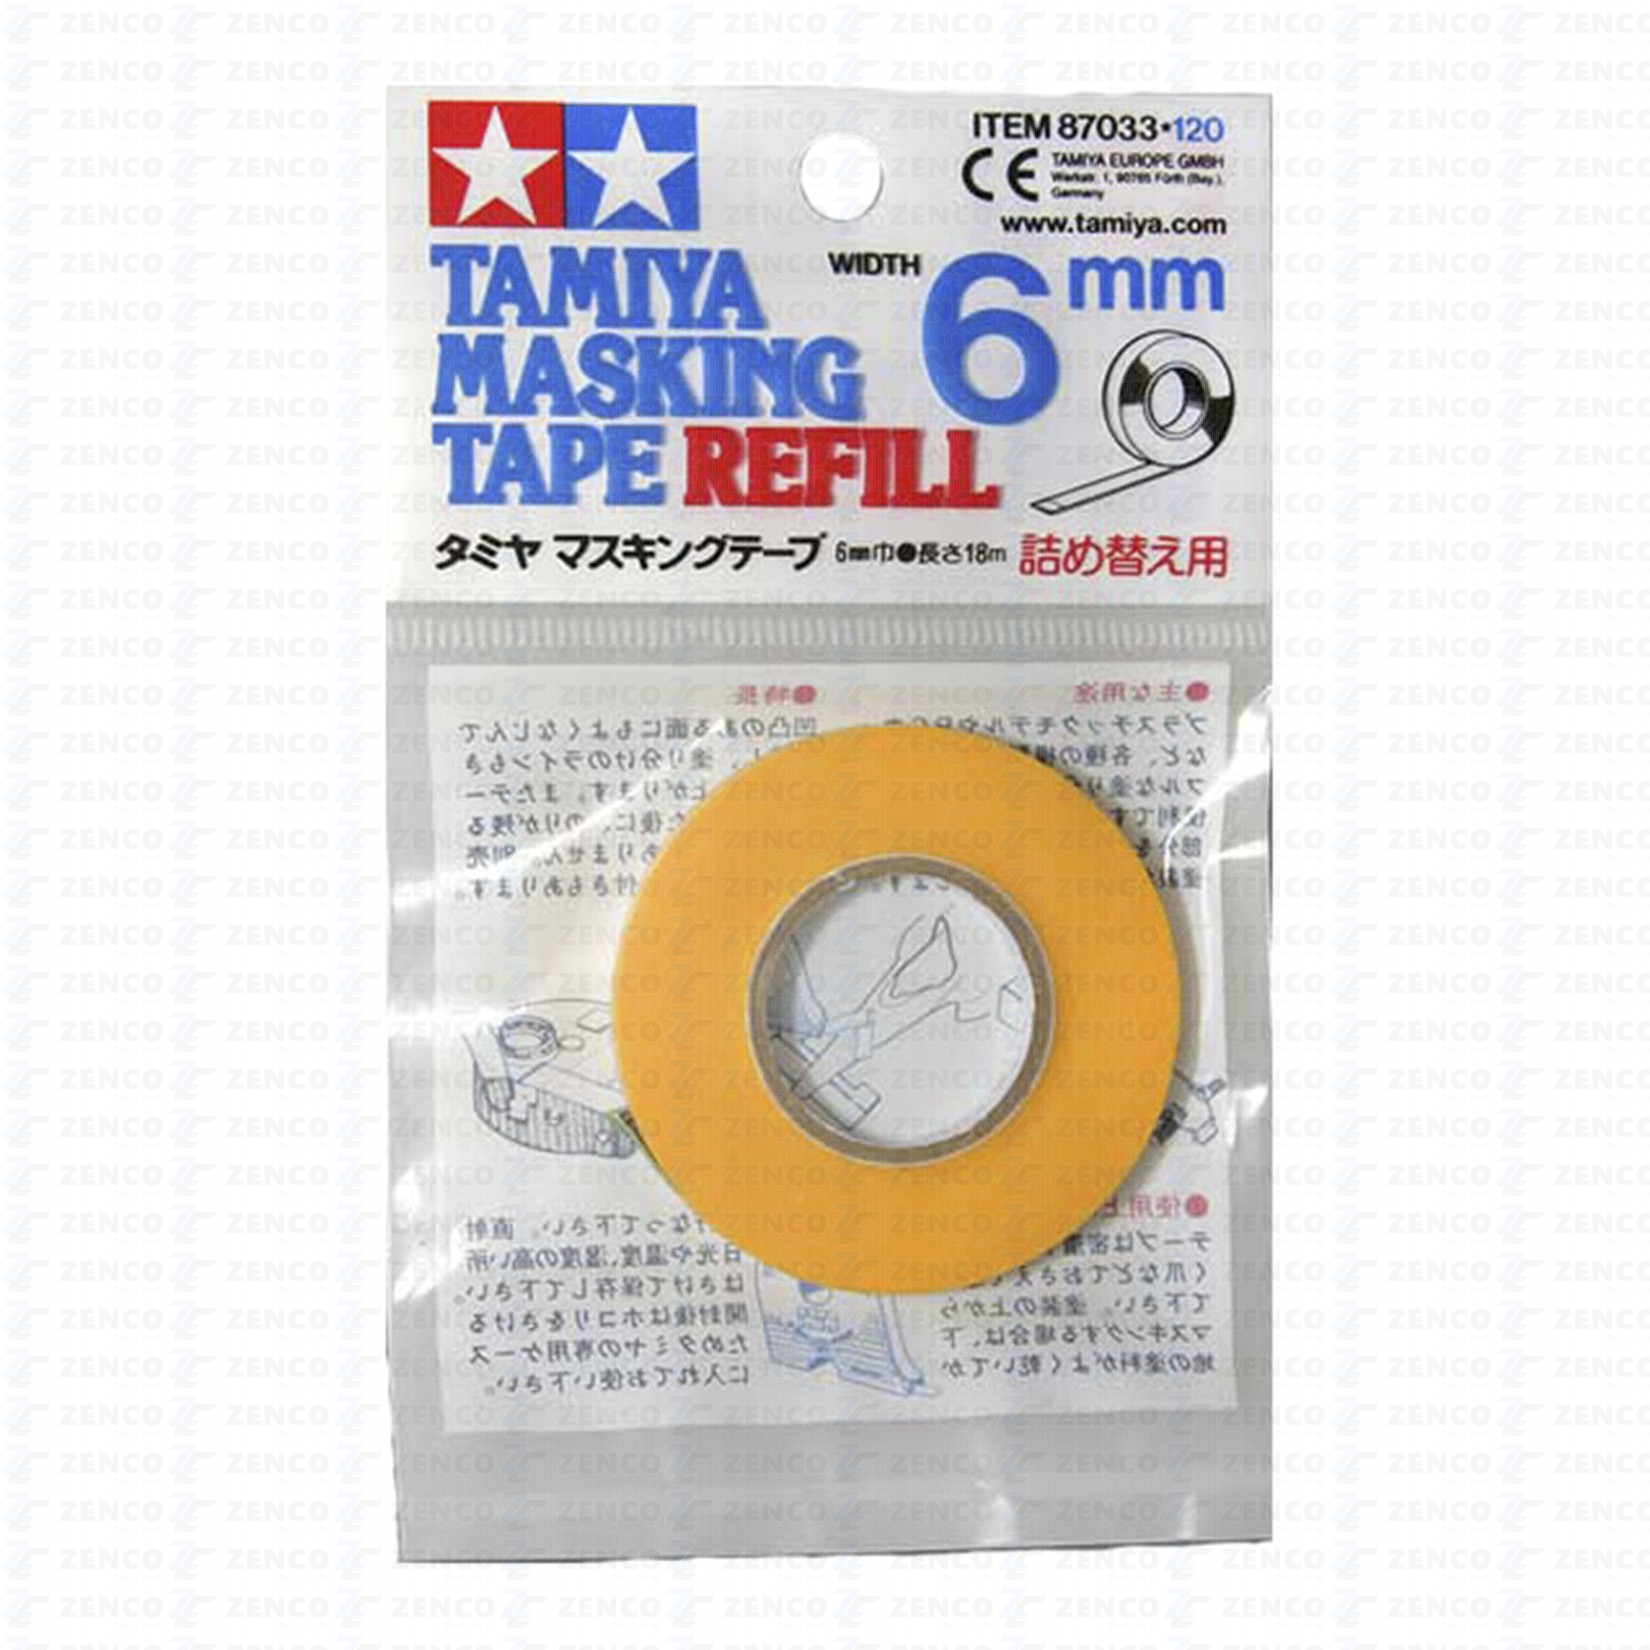 Tamiya Masking Tape Refill 6mm 87033